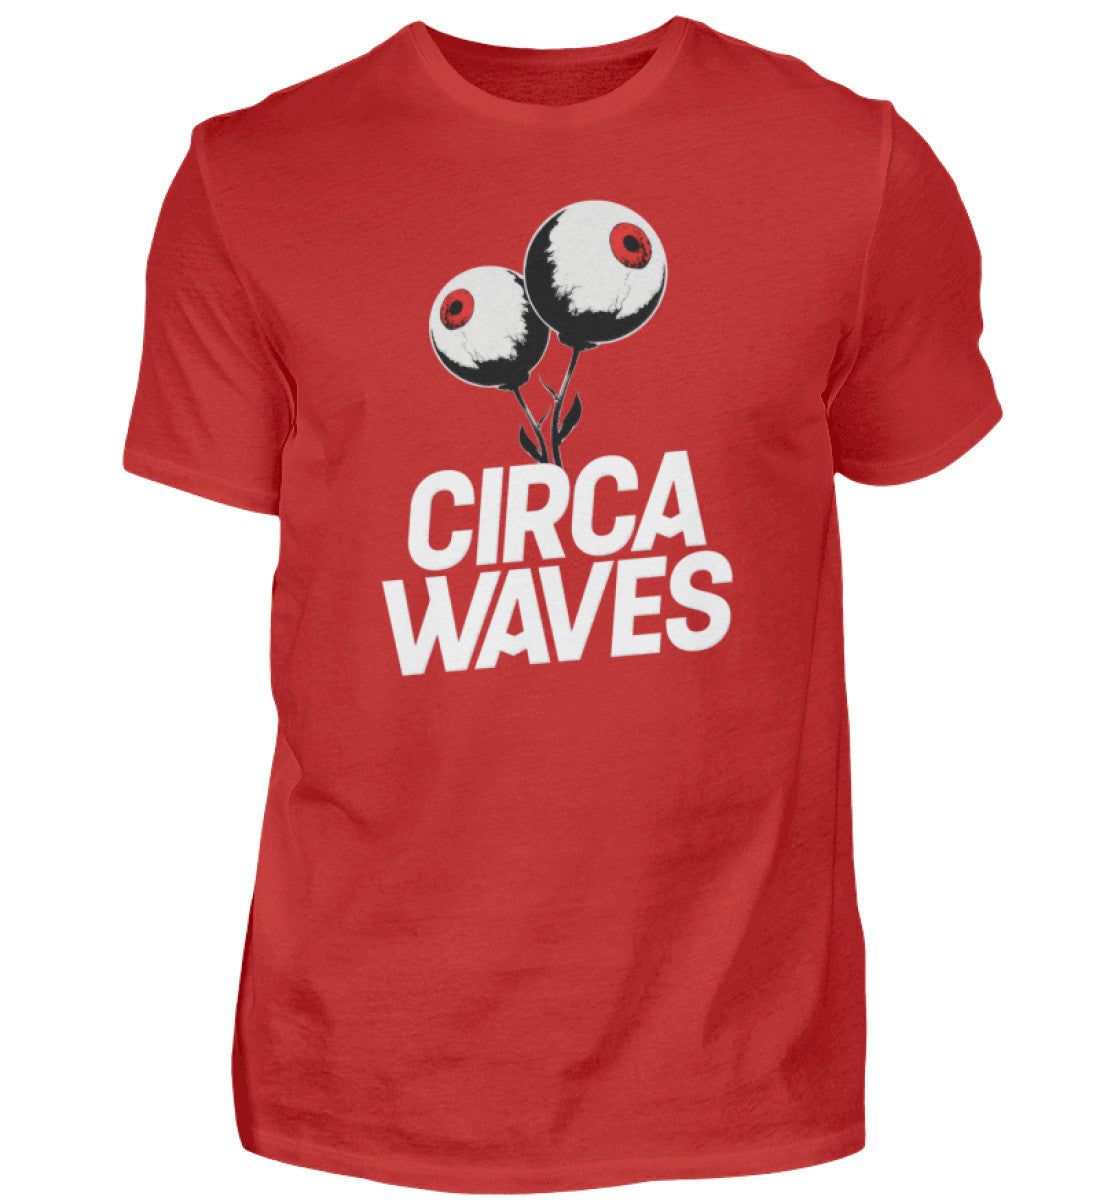 Circa Waves T-Shirt Men